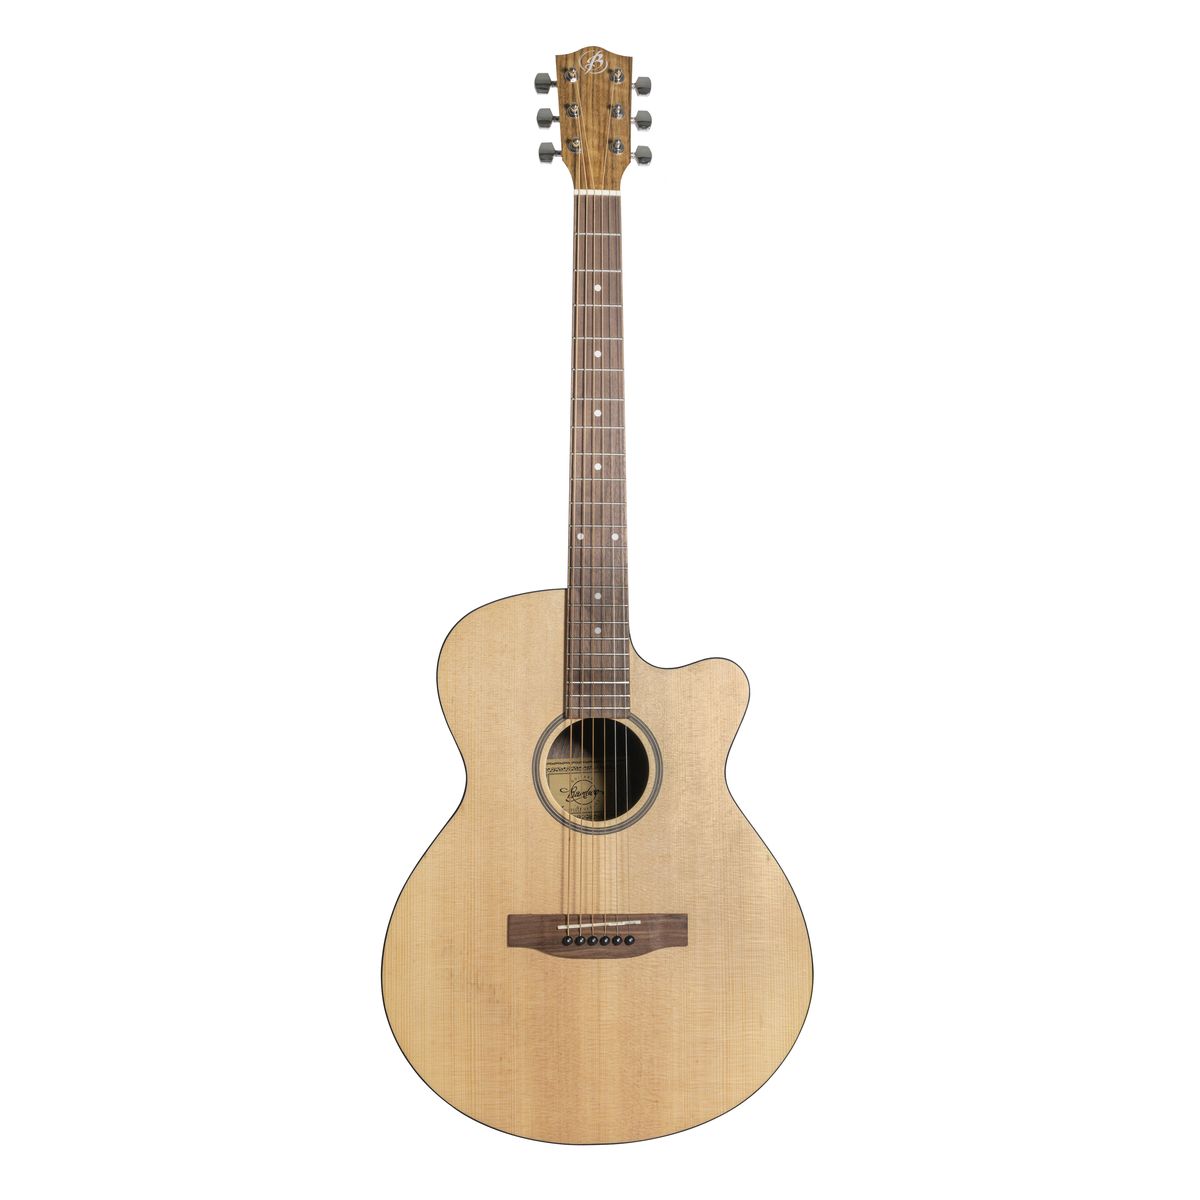 Акустические гитары Bamboo GA-40 Spruce акустические гитары bamboo ga 40 spruce